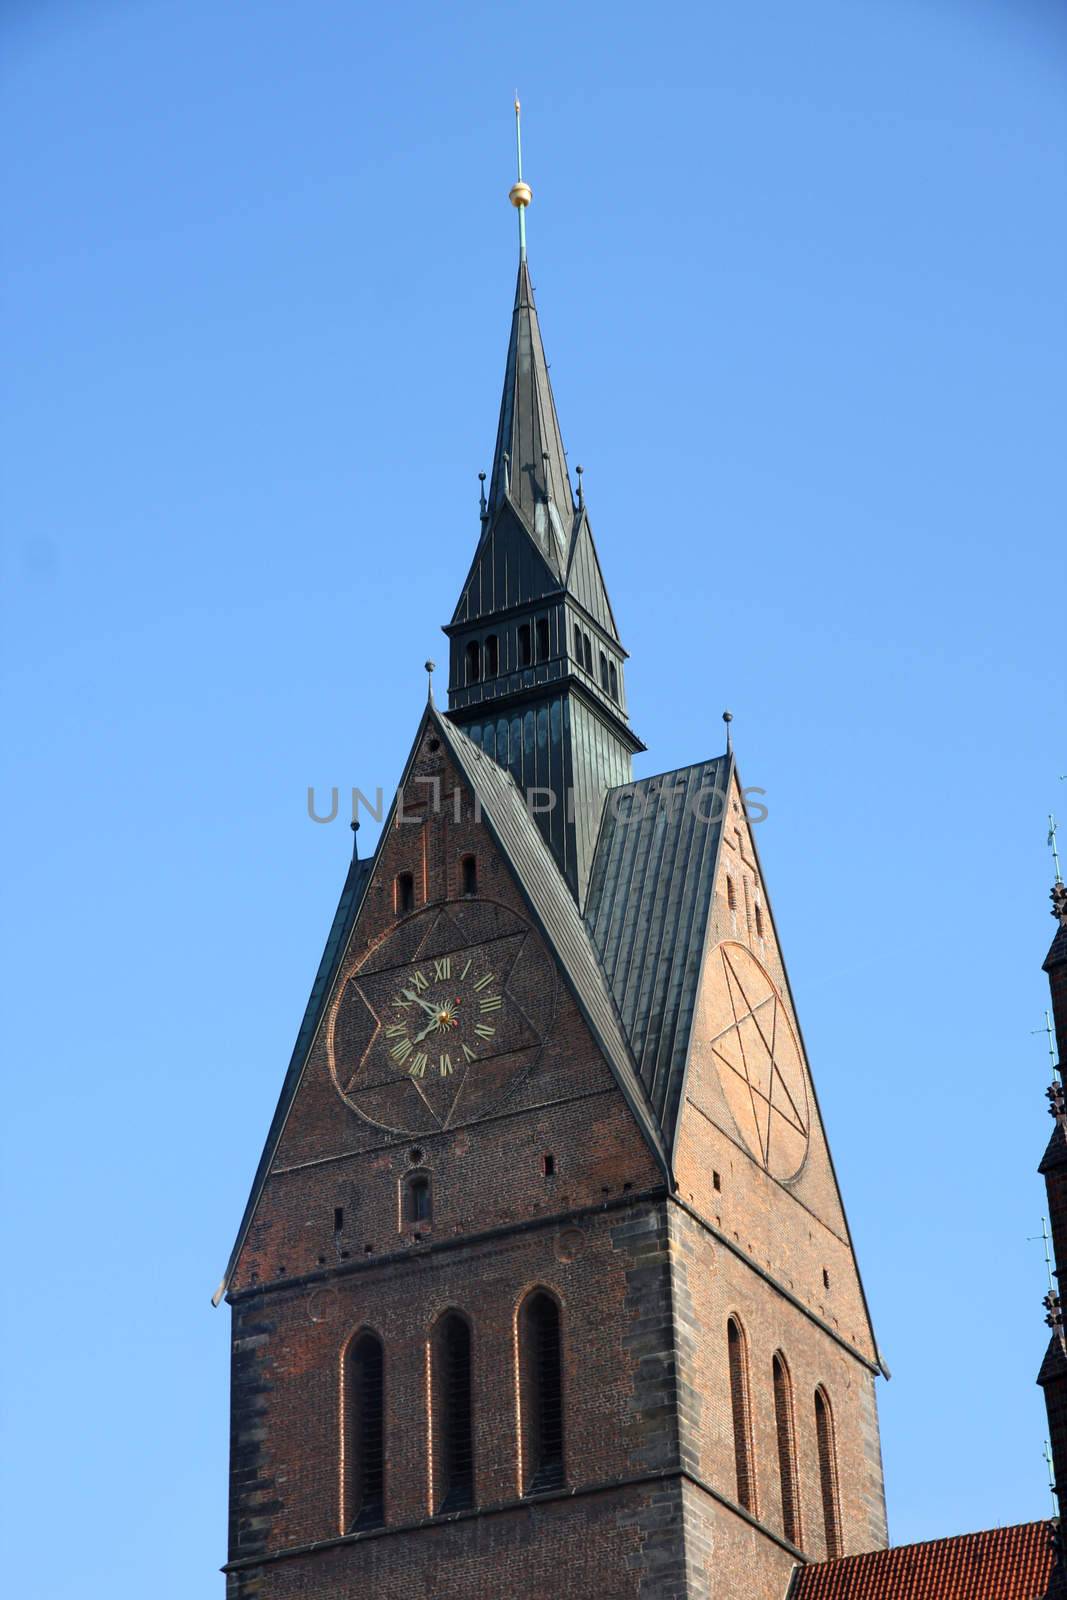 Market Church (Marktkirche) in Hannover, Germany by vladacanon